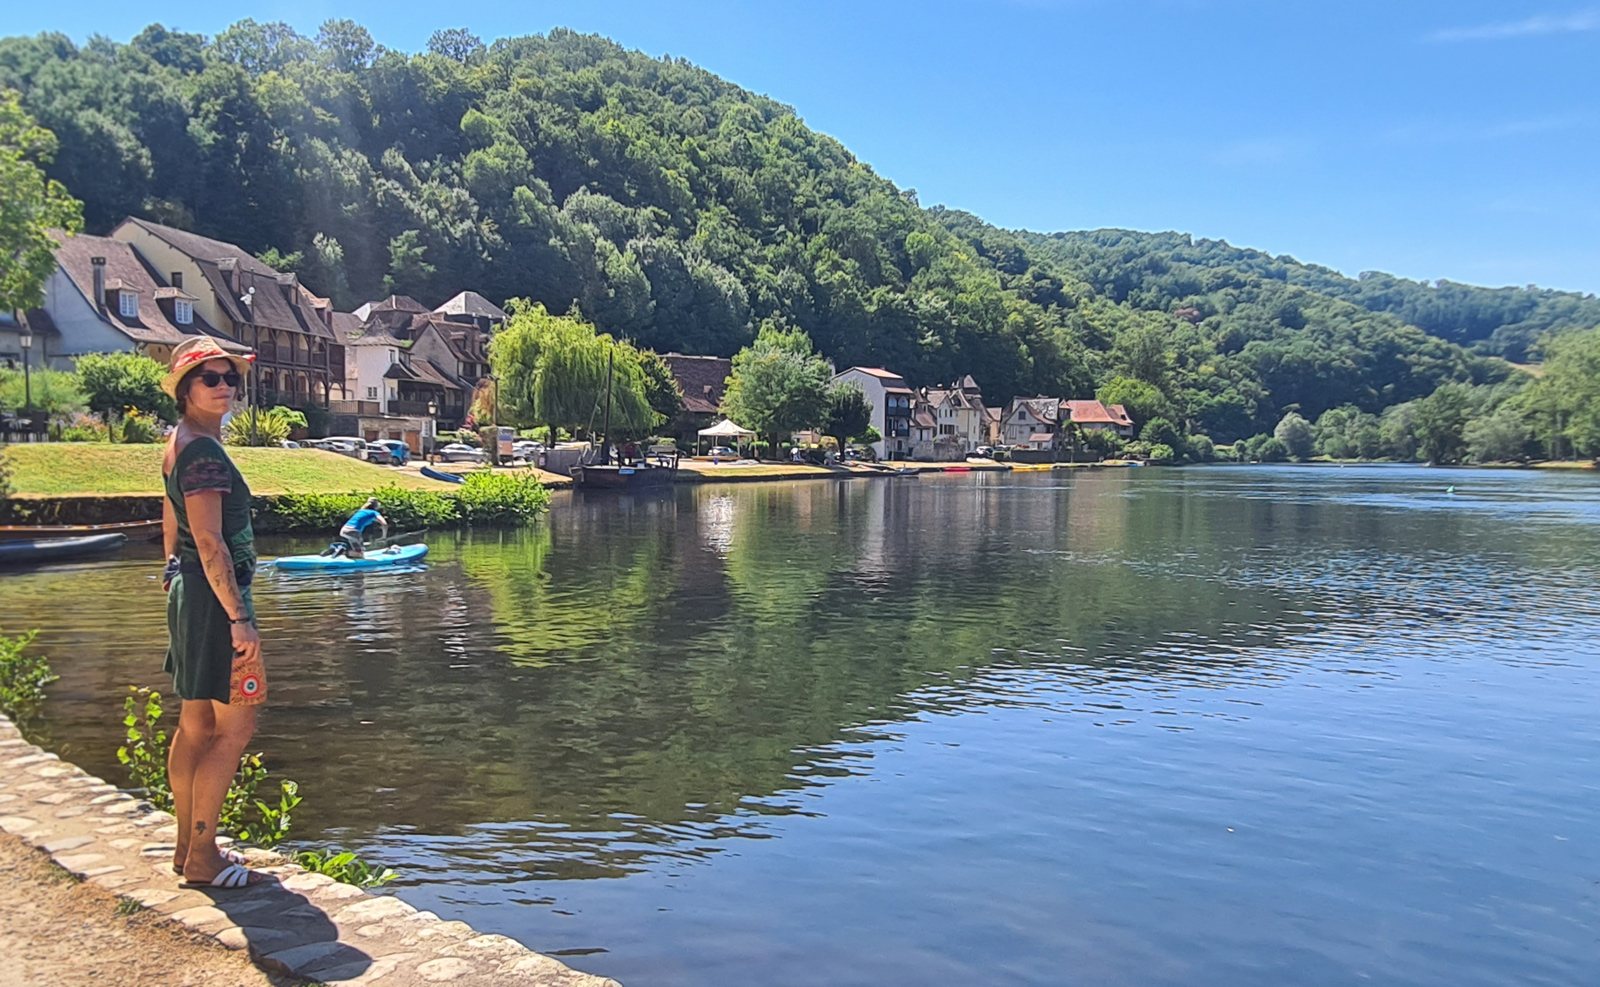 Beaulieu-sur-Dordogne, the must-see!